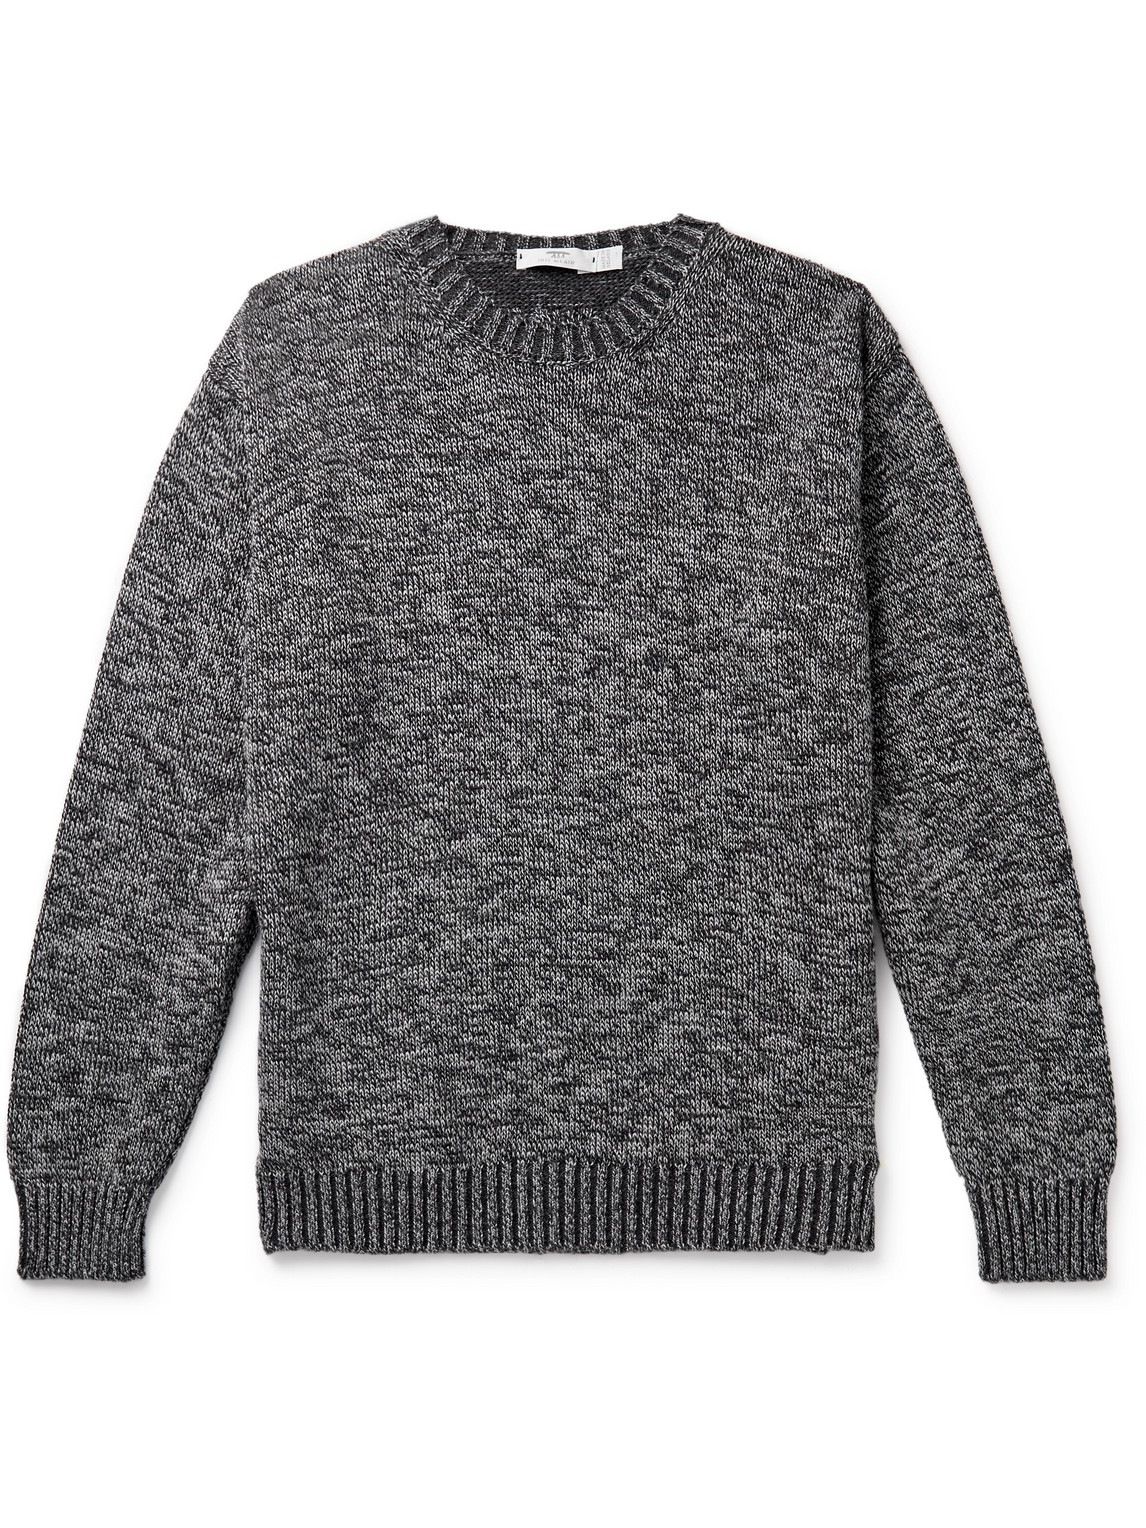 Inis Meáin Alpaca, Merino Wool, Cashmere and Silk-Blend Sweater